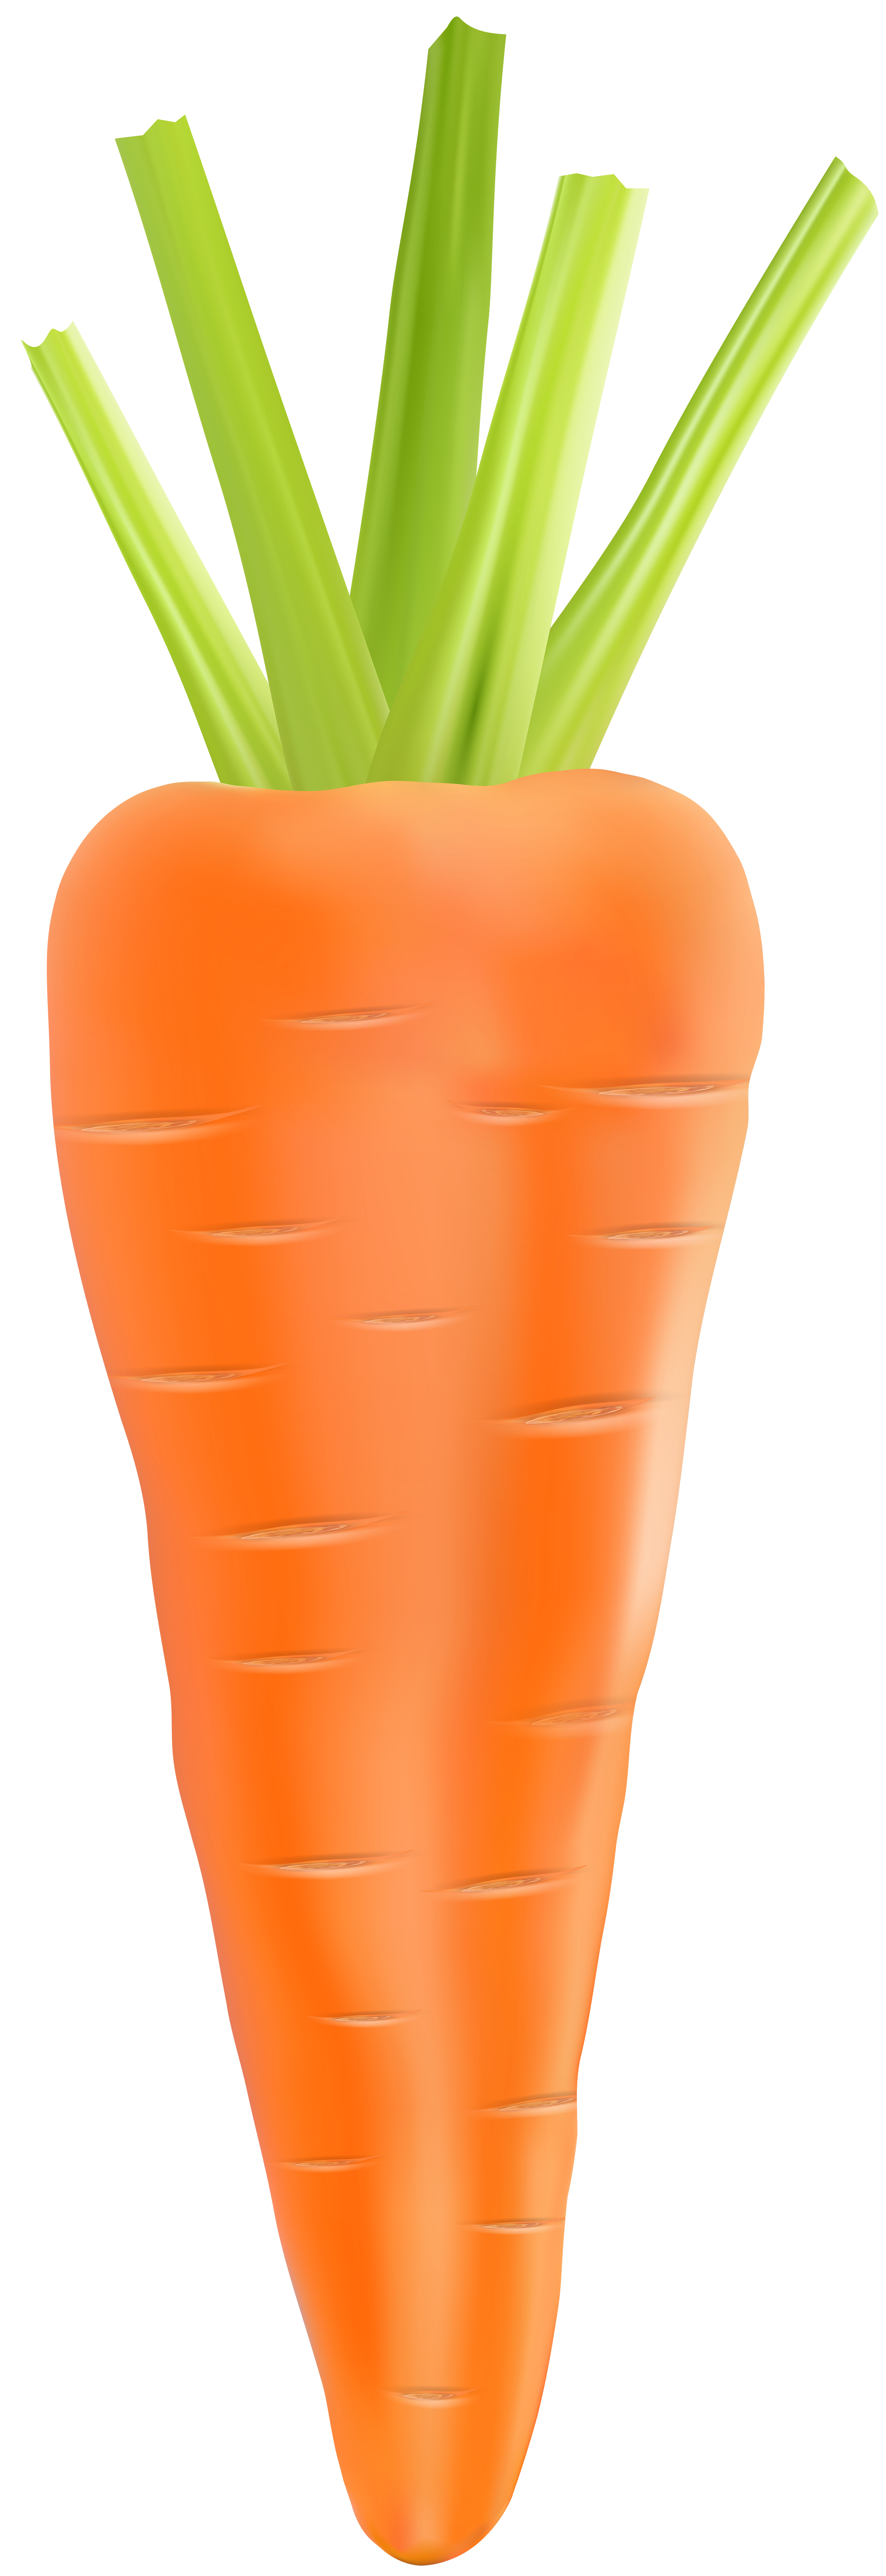 Clipart frame vegetable. Carrot transparent png clip